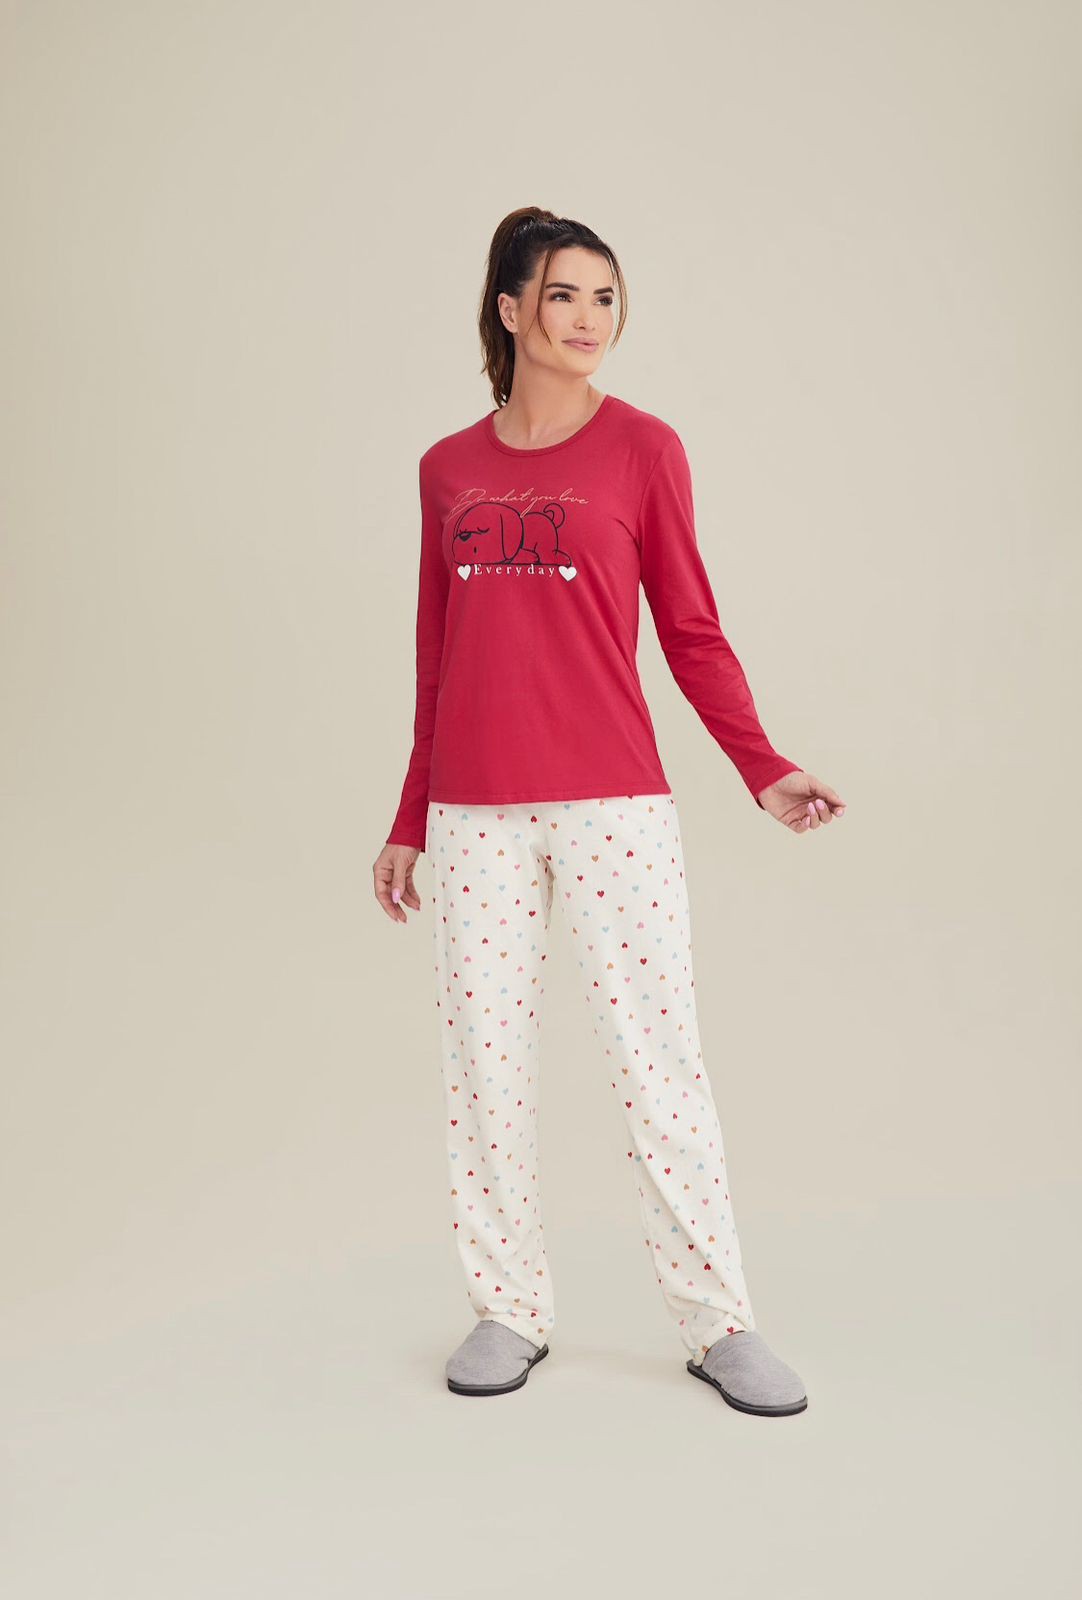 Pijama feminino adulto com calça estampada. - Top Models Multimarcas